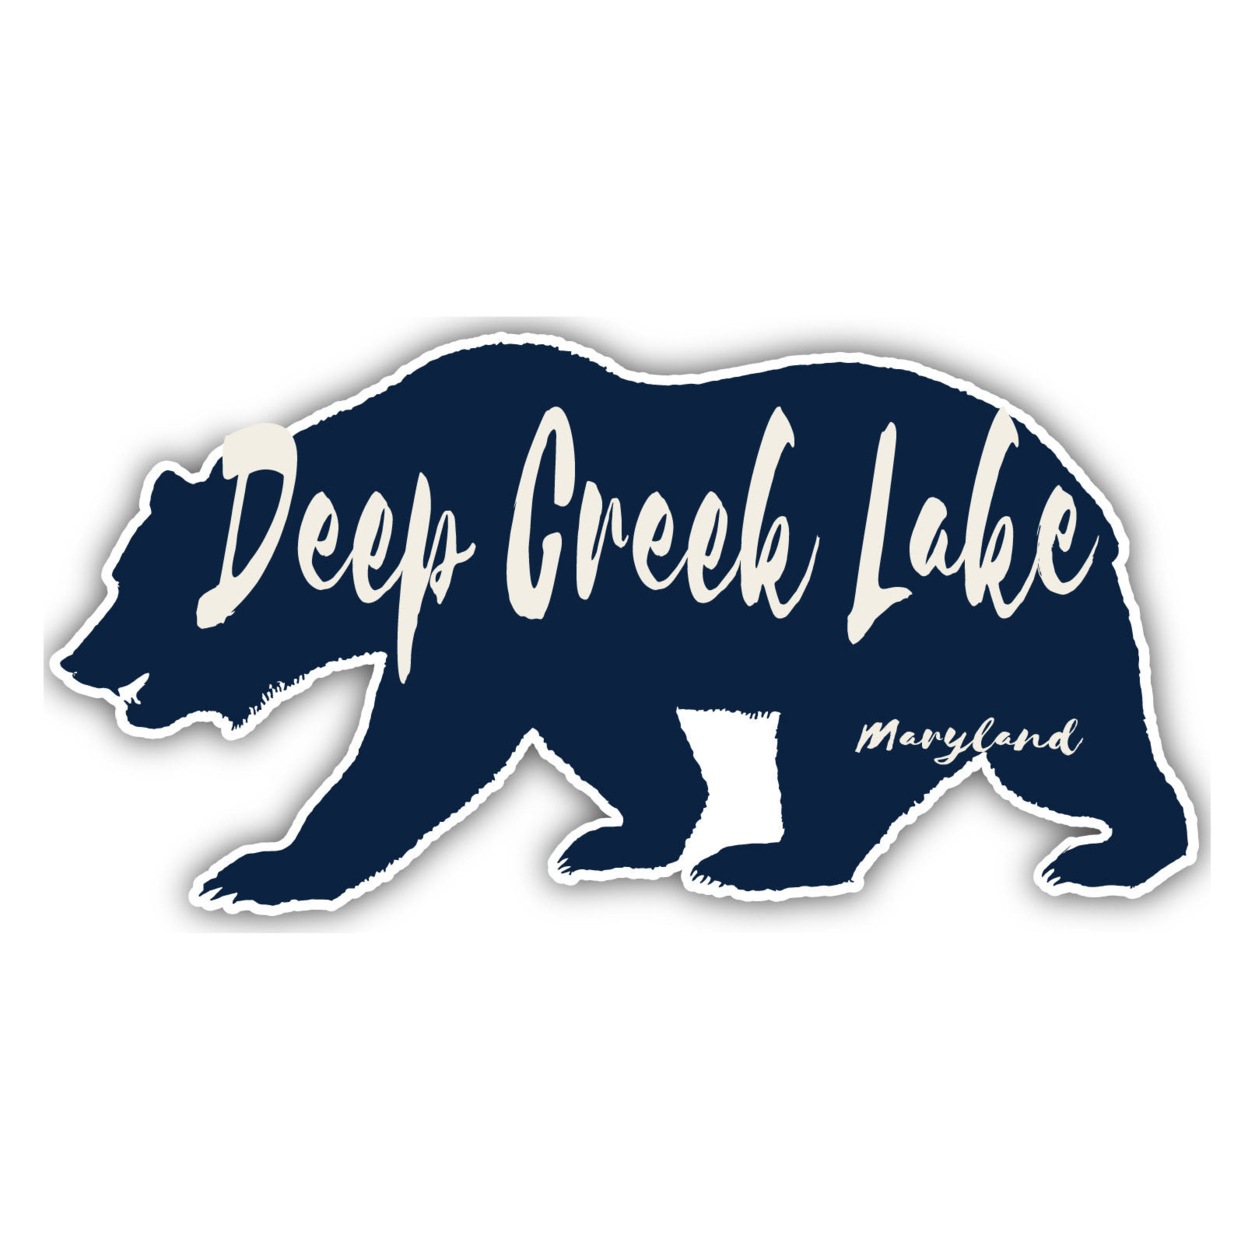 Deep Creek Lake Maryland Souvenir Decorative Stickers (Choose Theme And Size) - Single Unit, 8-Inch, Bear